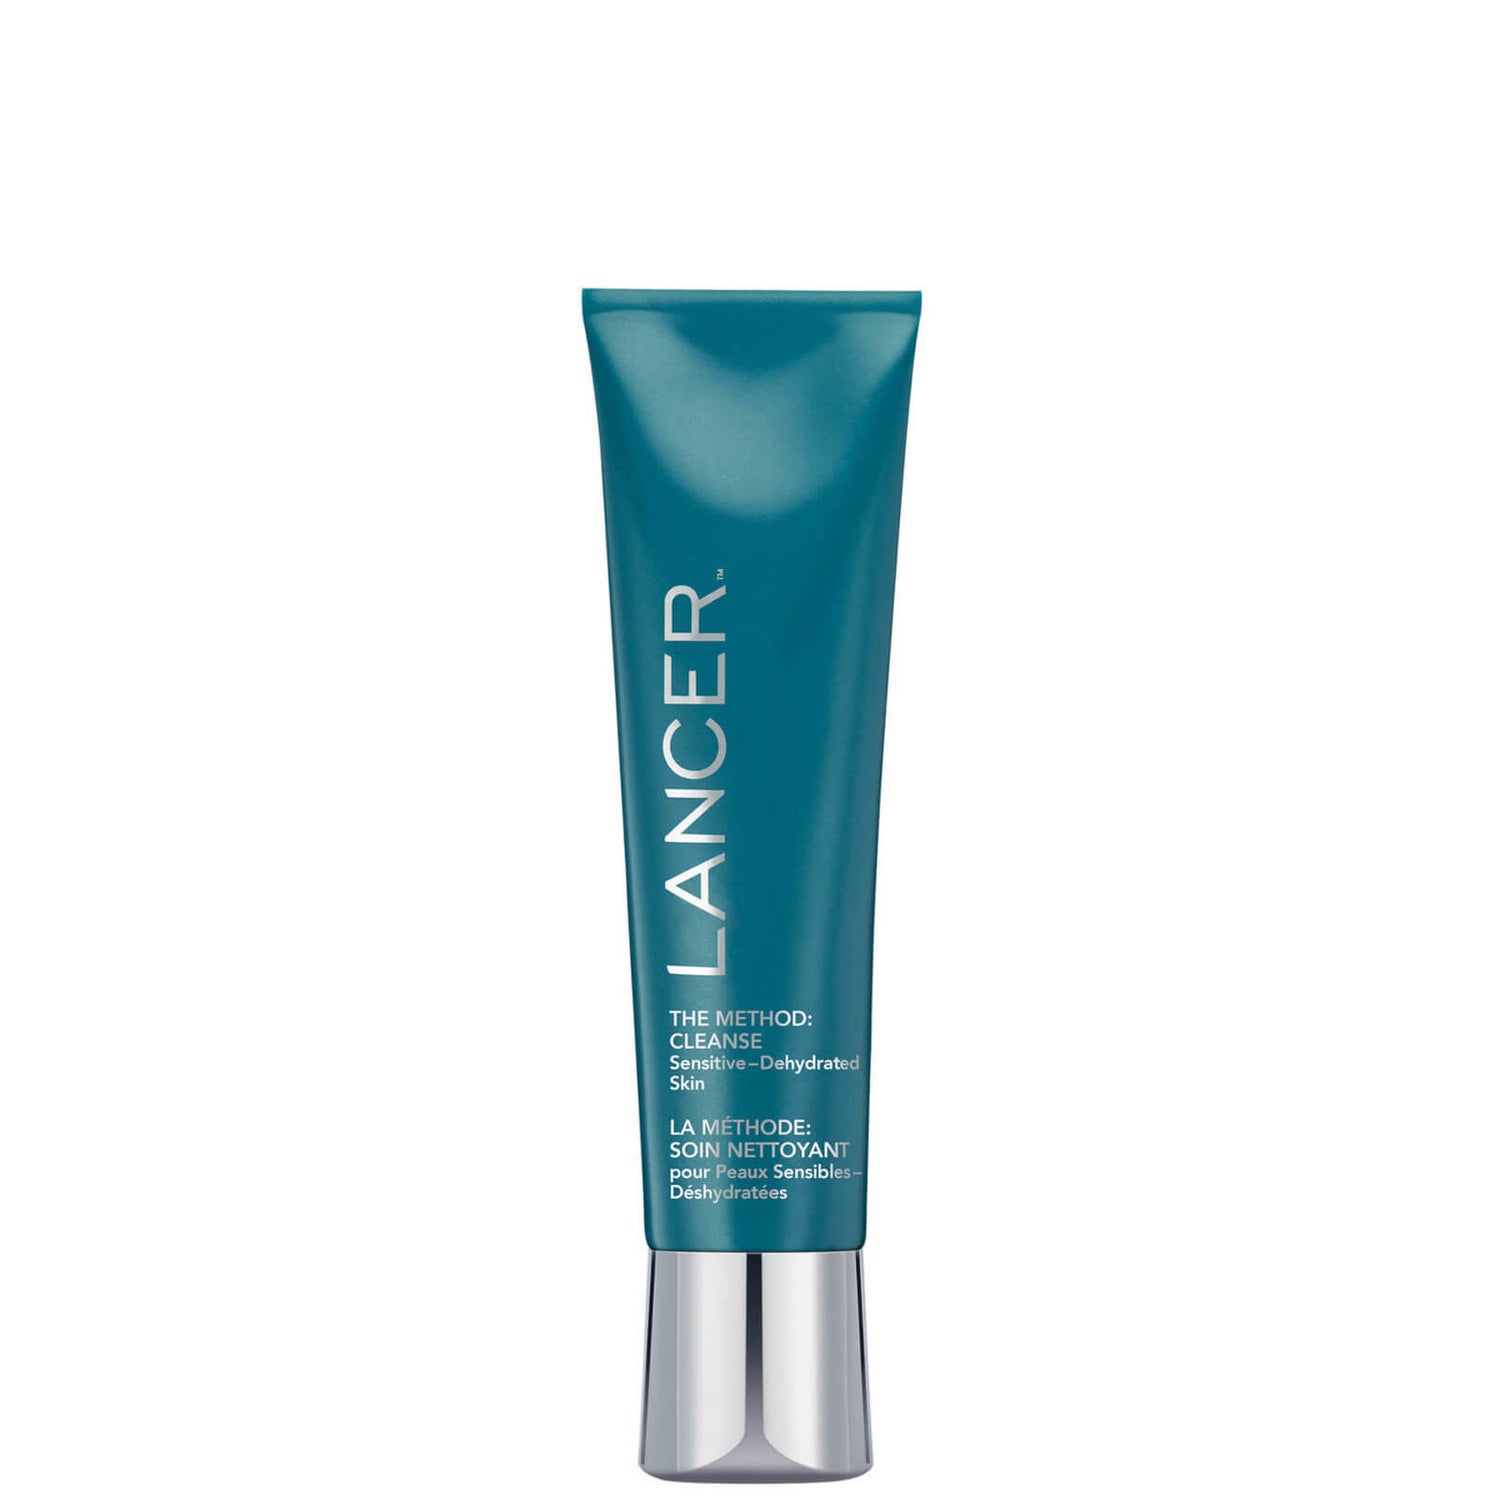 Lancer Skincare The Method: Cleanse Sensitive-Dehydrated Skin (4.05 fl. oz.)